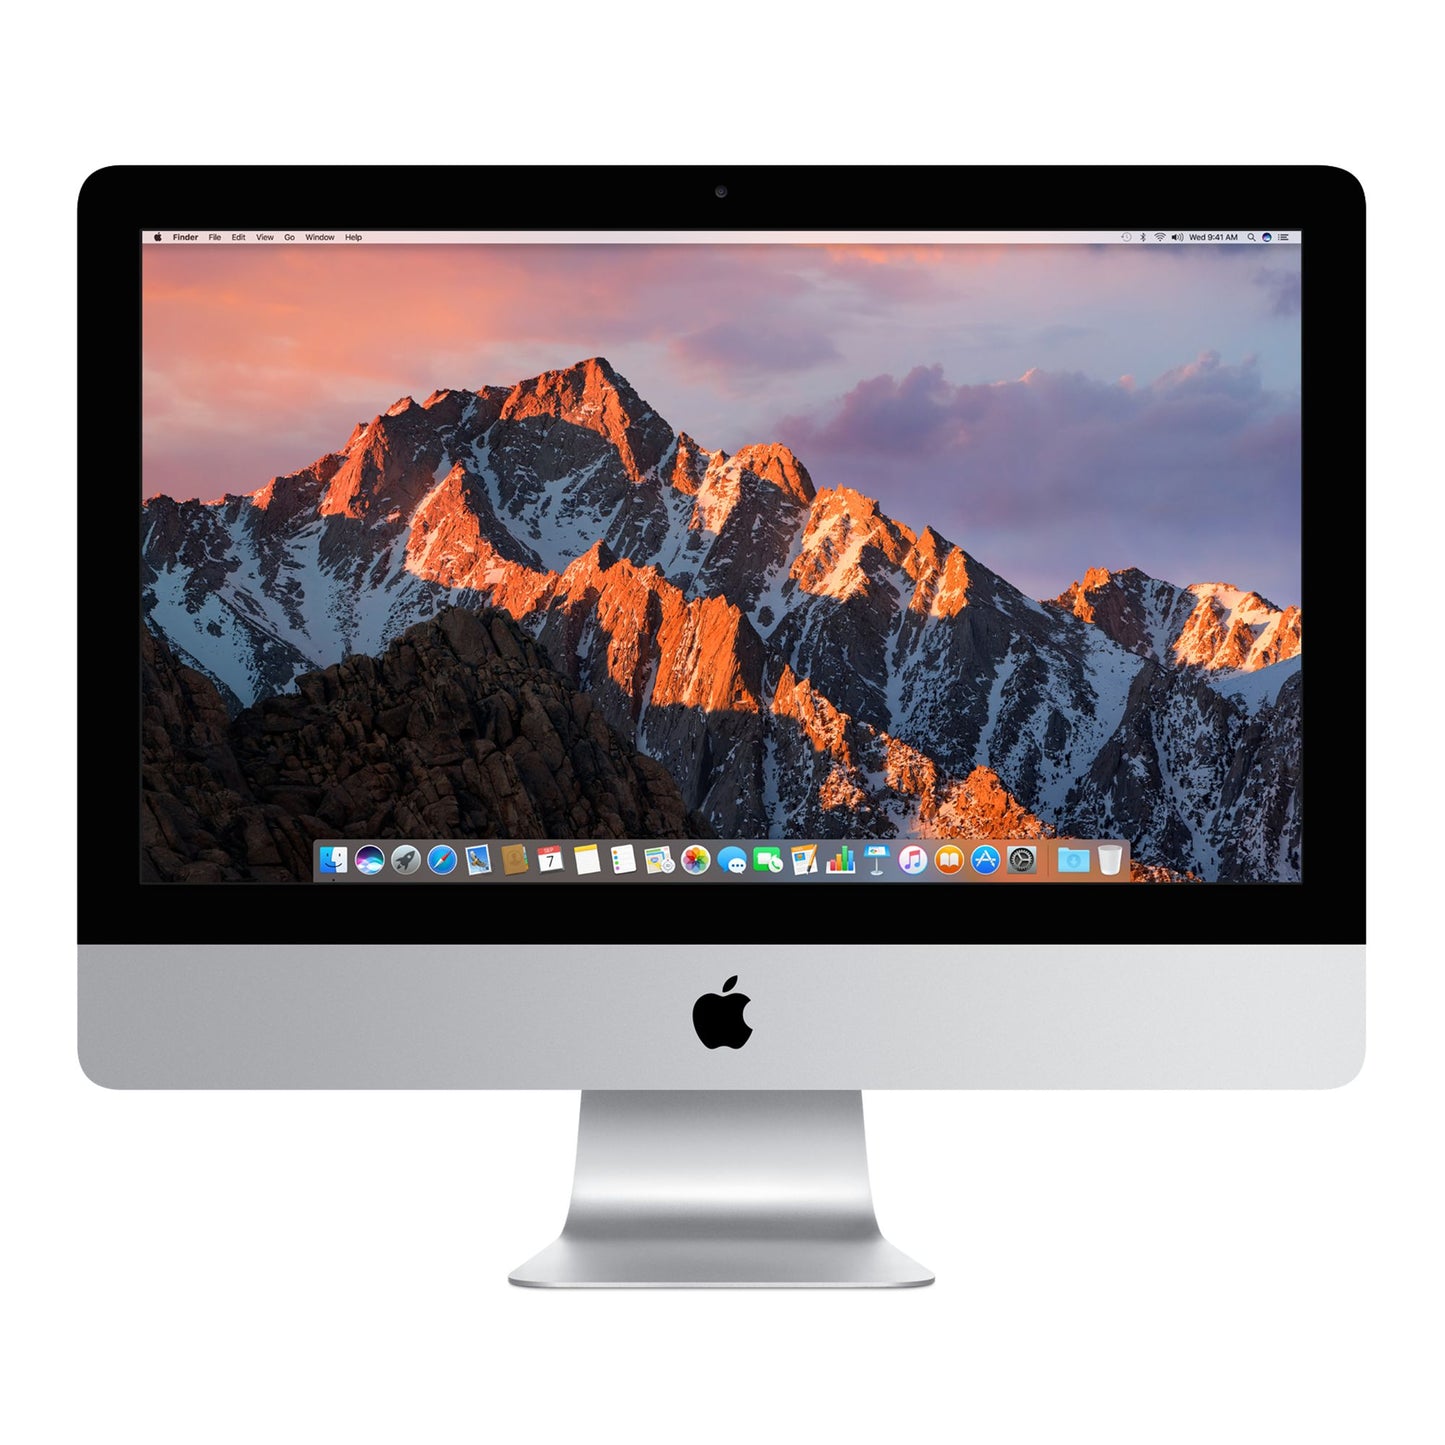 Apple iMac Mid 2017 - 21.5-inch - Core i5 7400 - 8GB RAM - 1TB HDD